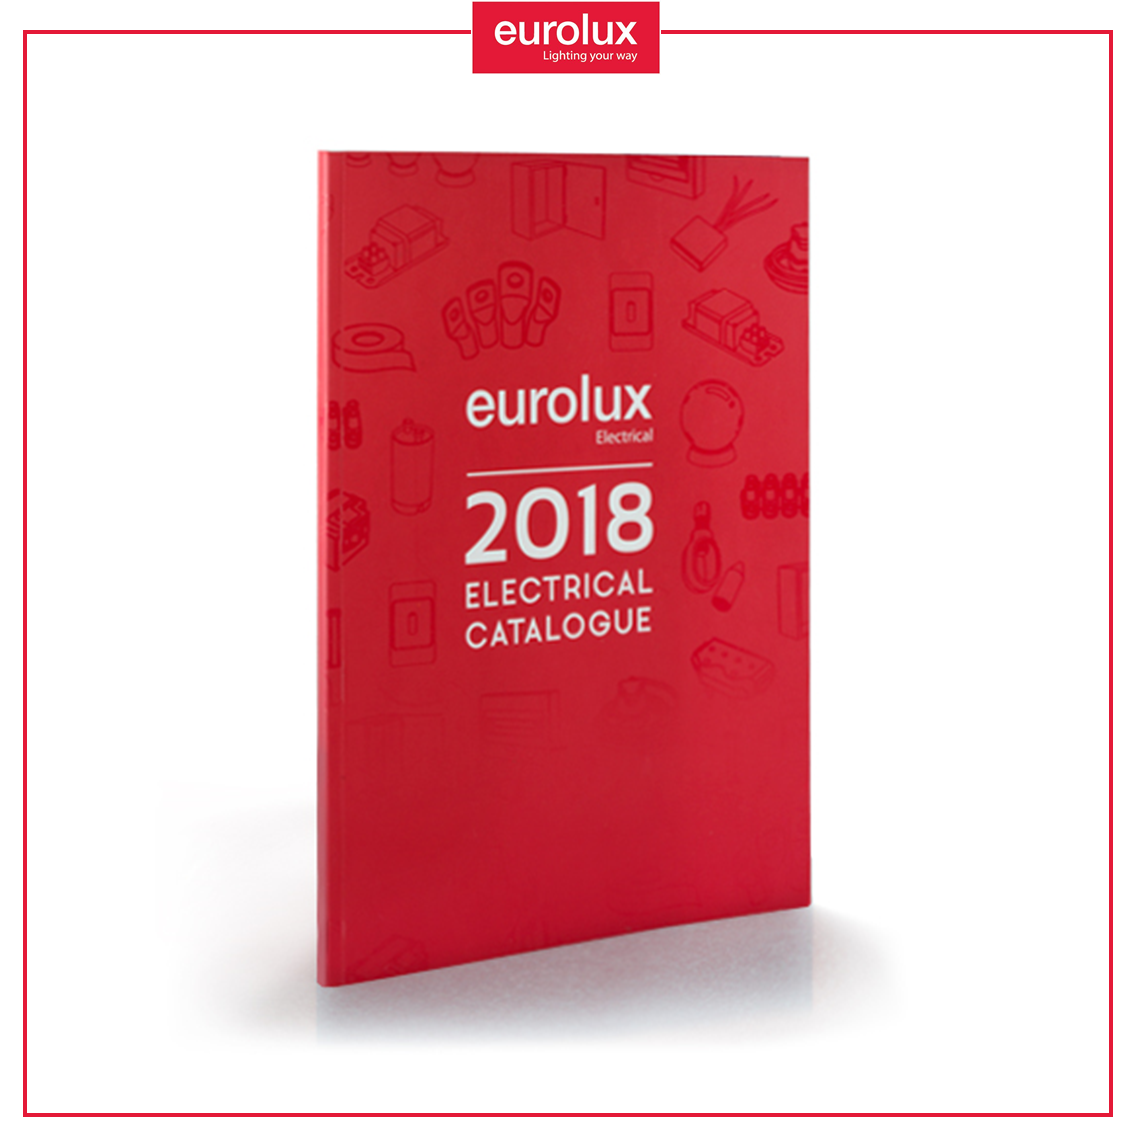 EUROLUX - Electrical Catalogue Catalogue